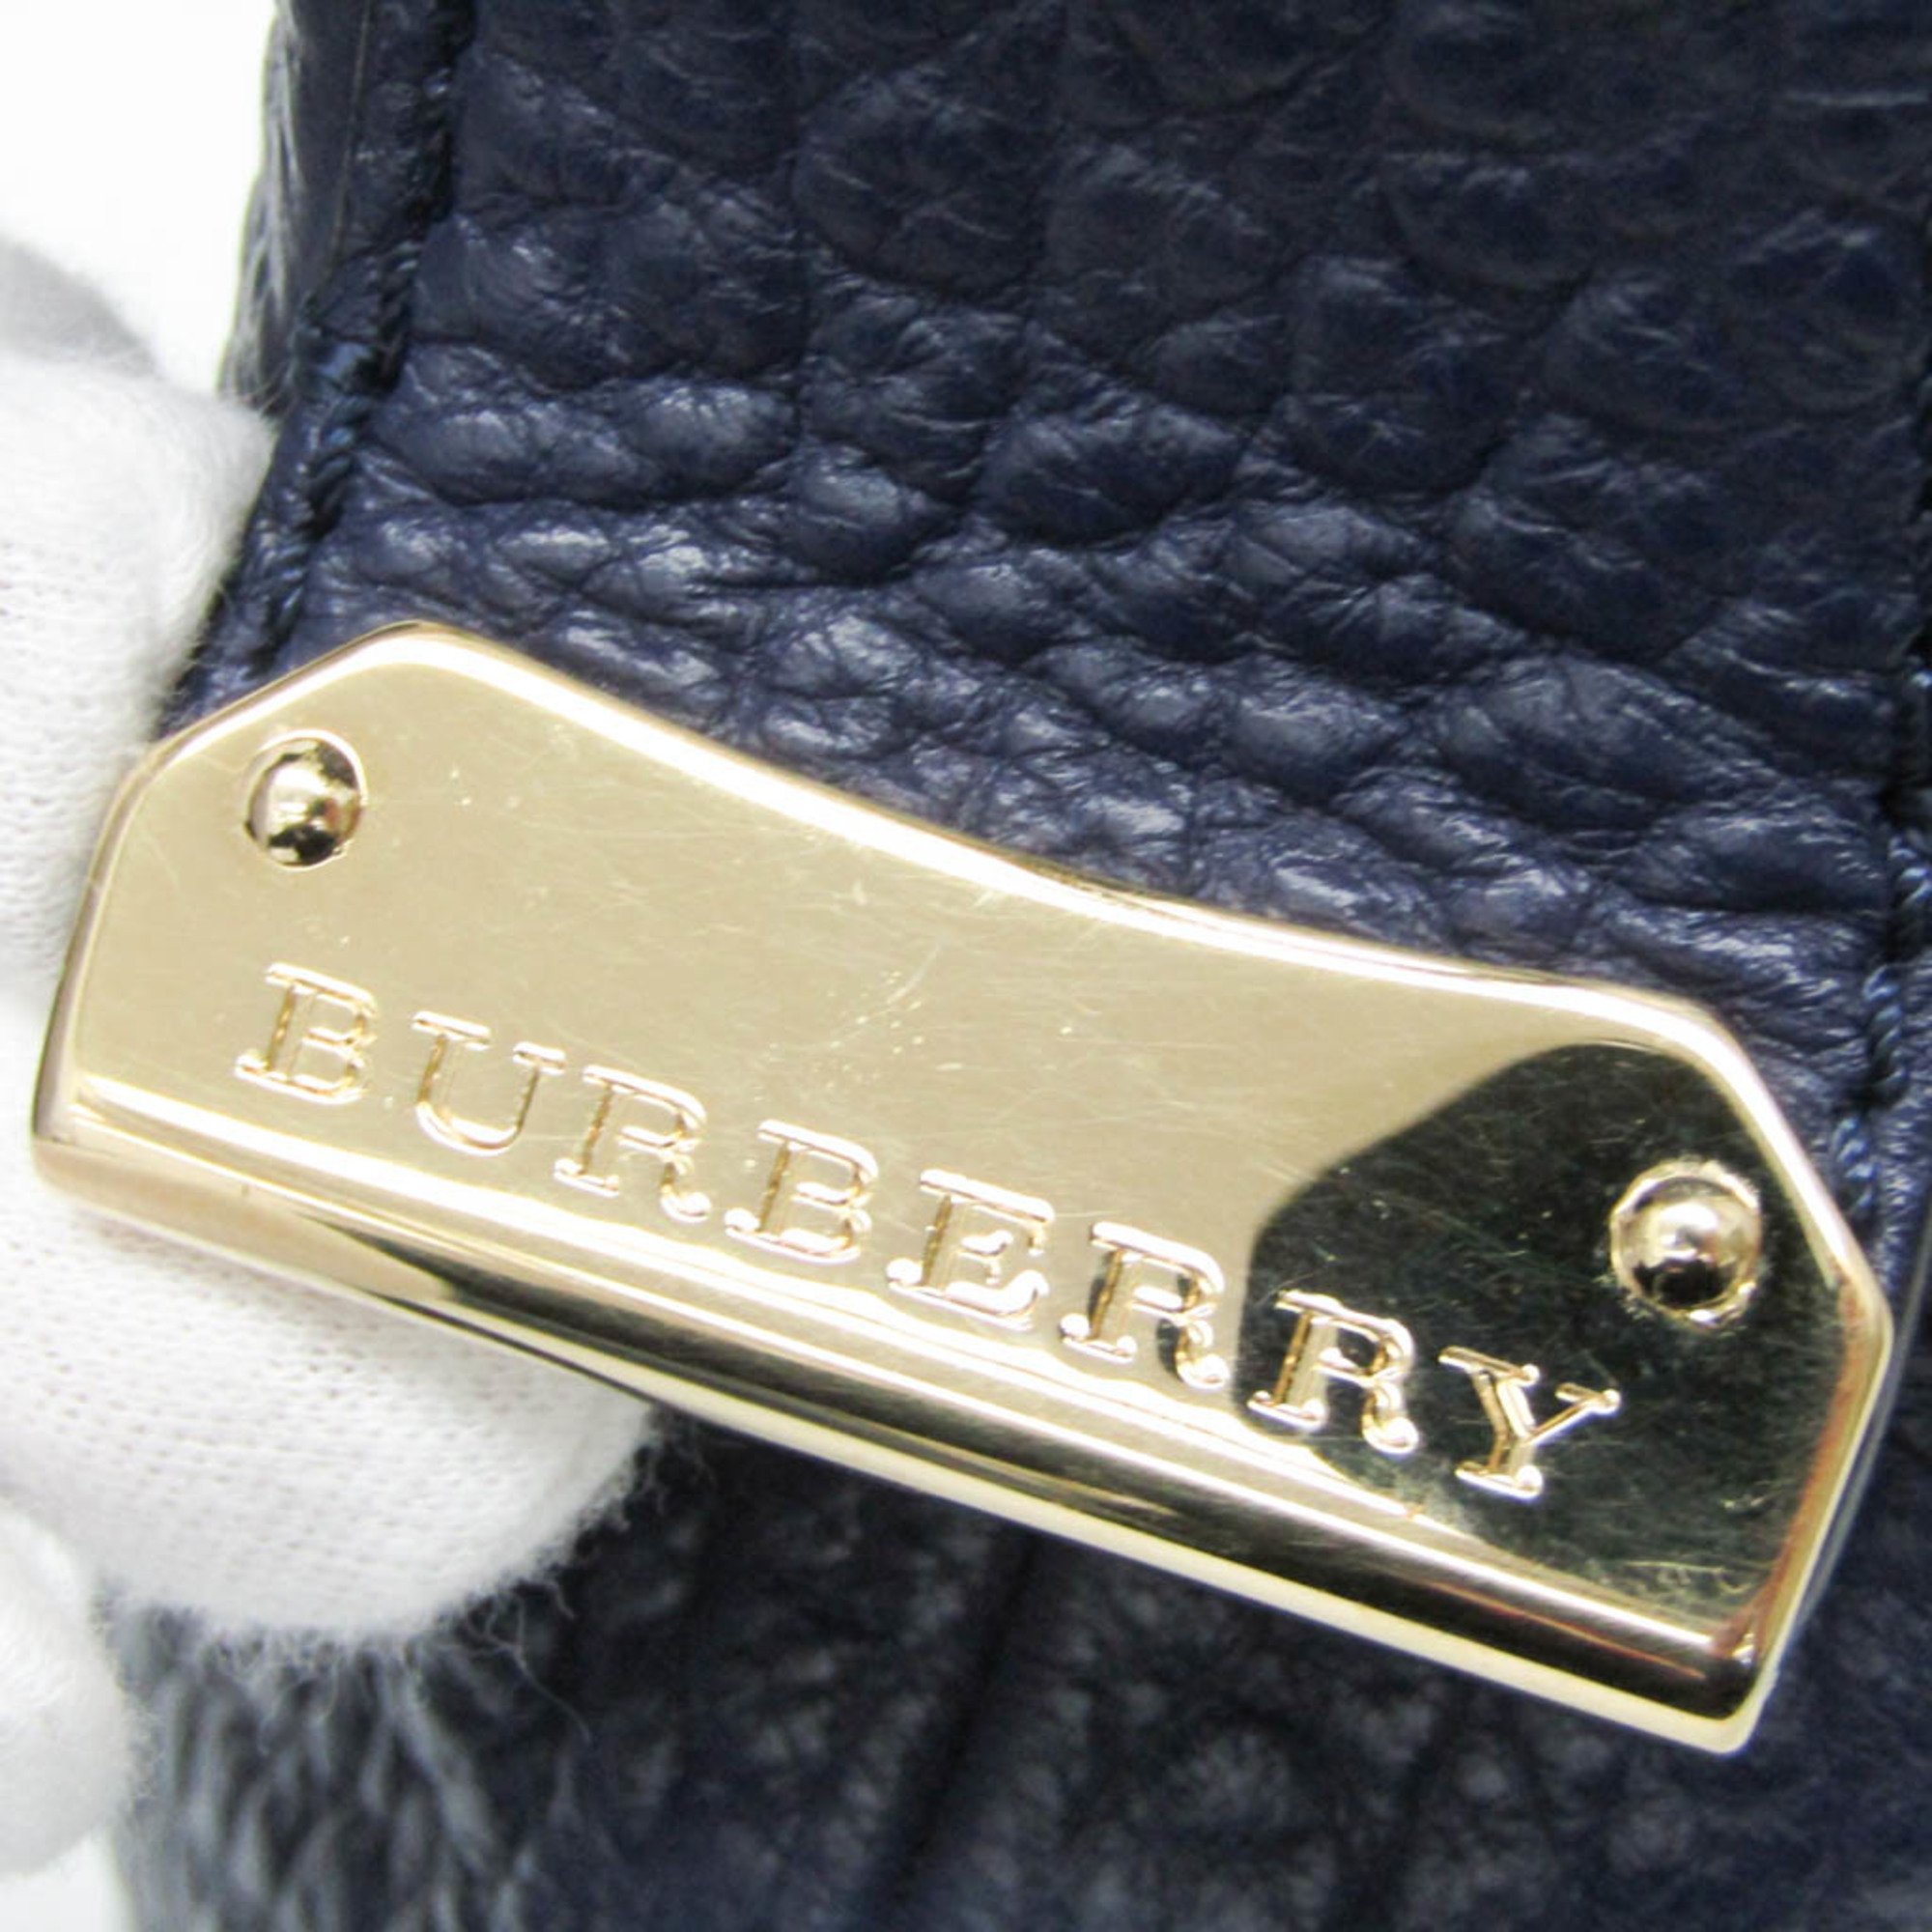 Burberry 3898213 Women's Leather Handbag,Shoulder Bag Navy